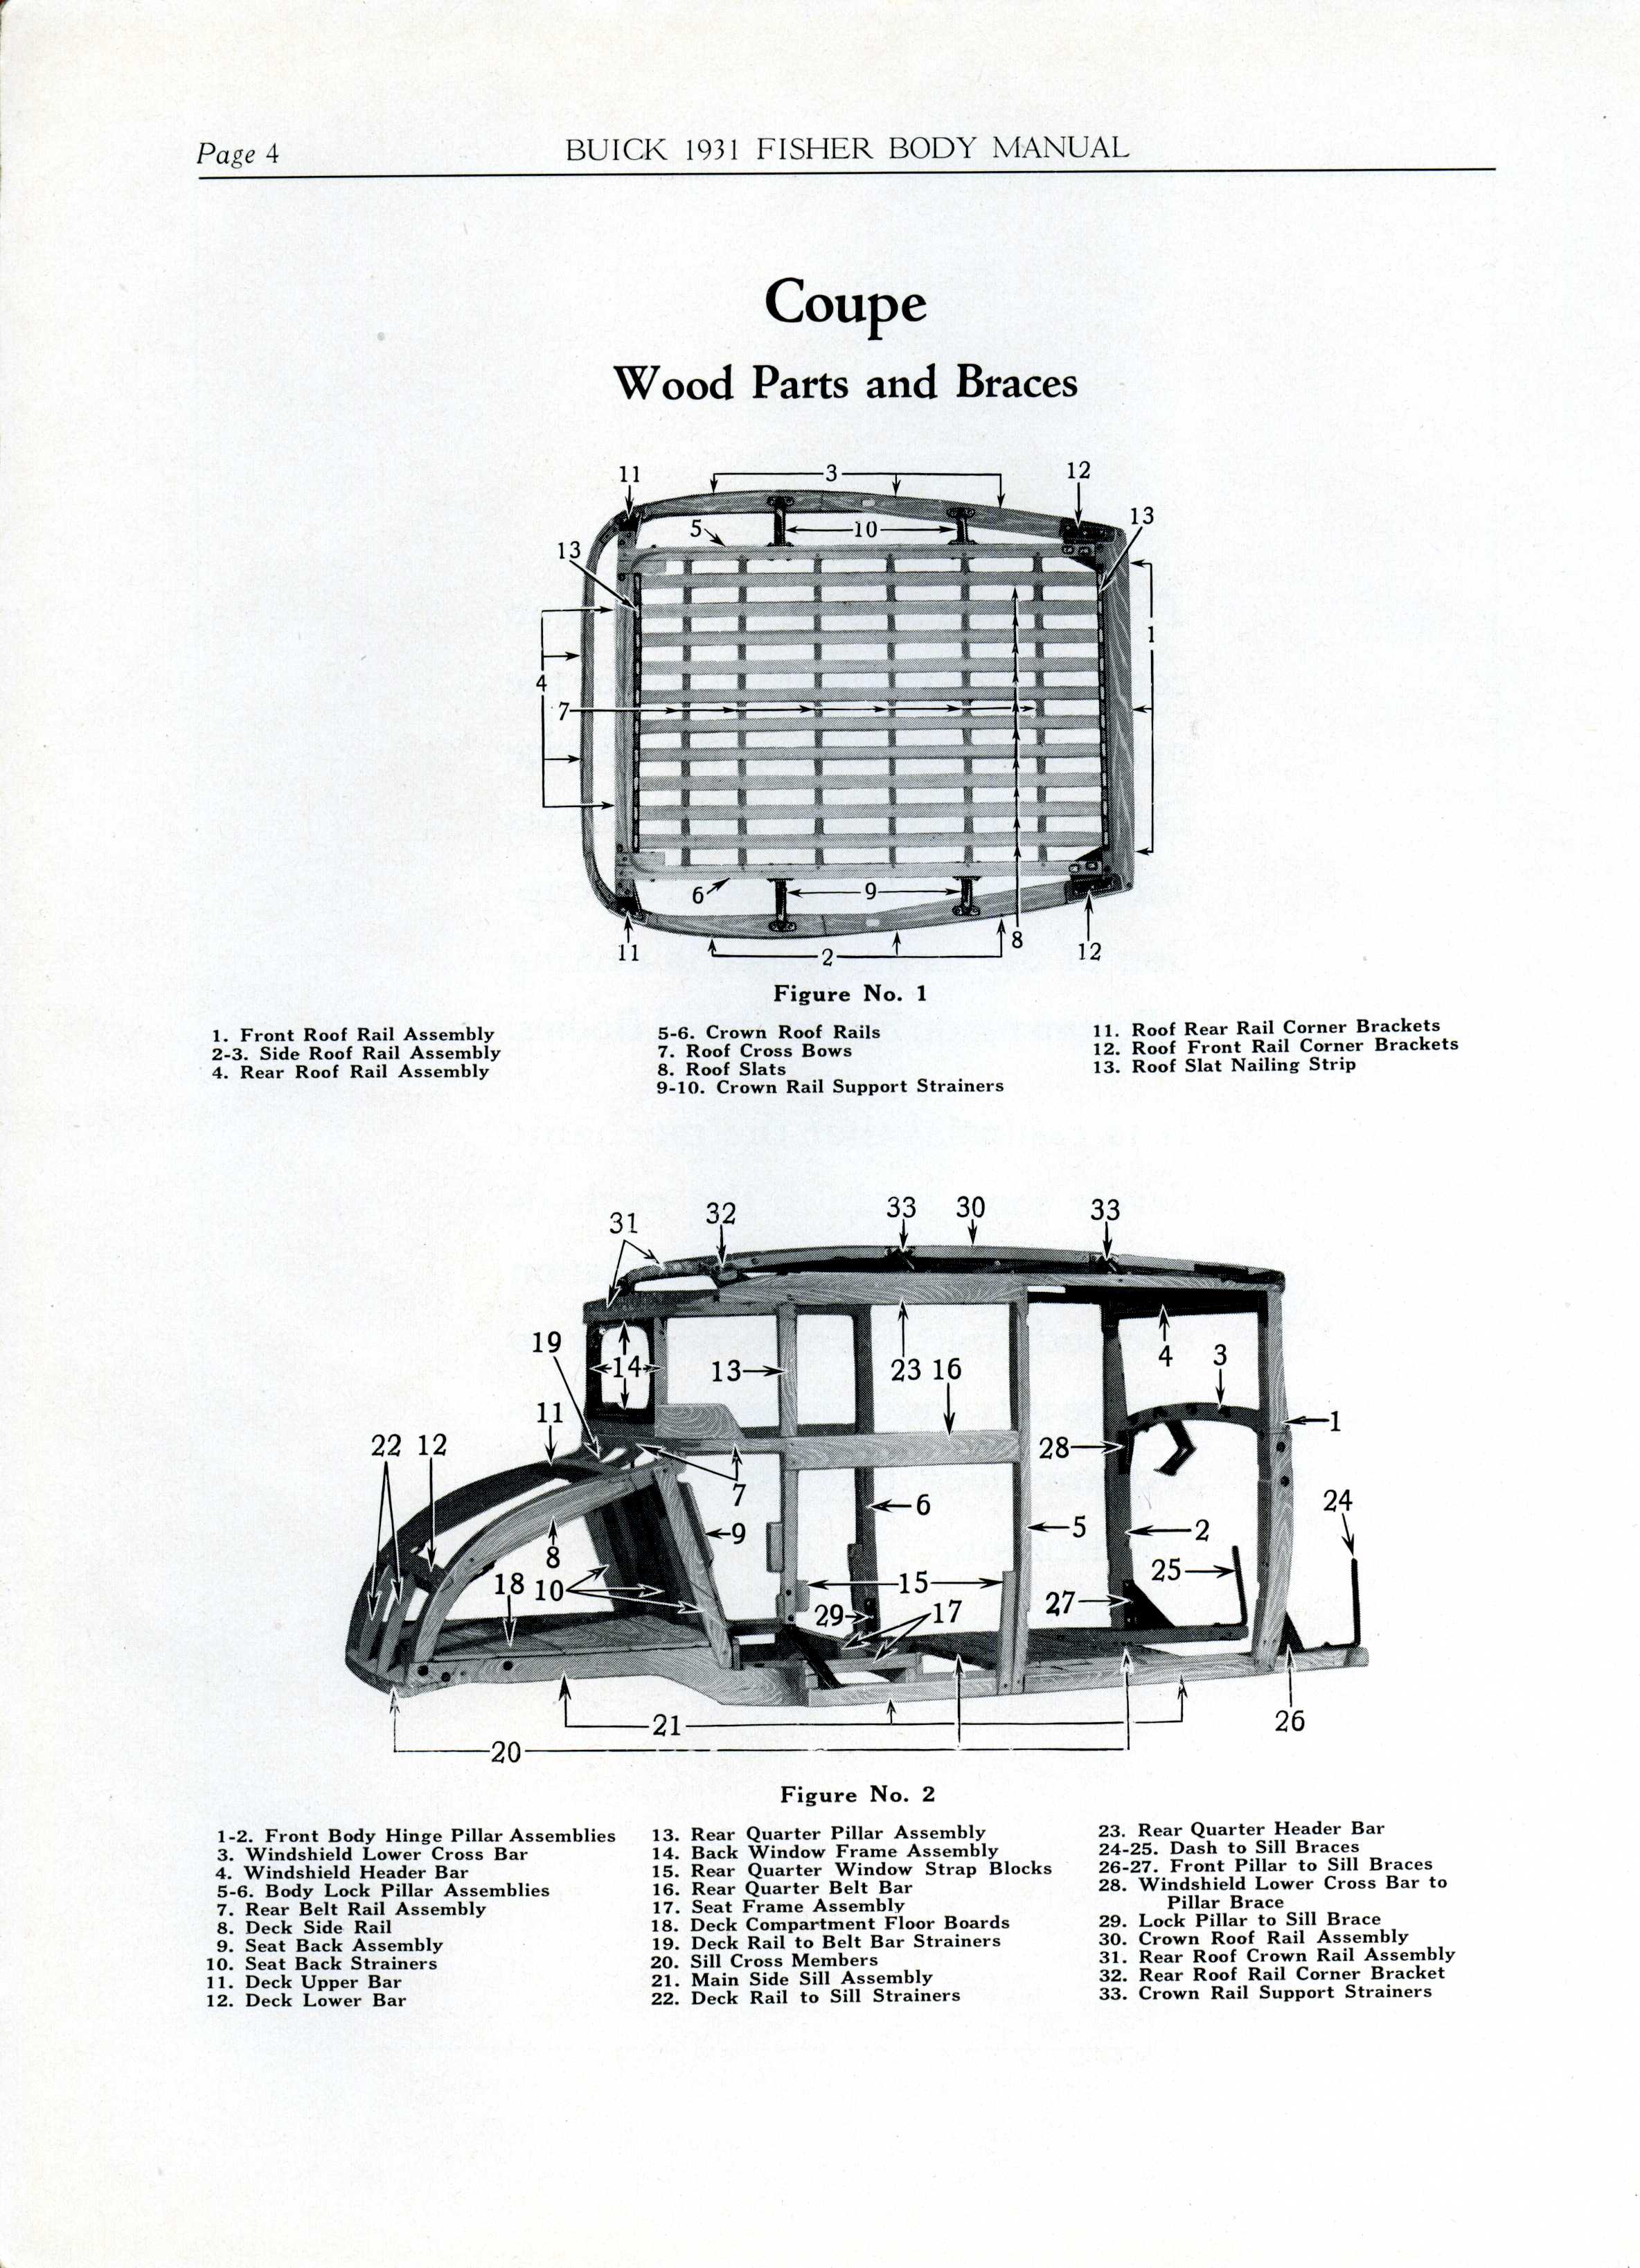 1931 Buick Fisher Body Manual-04